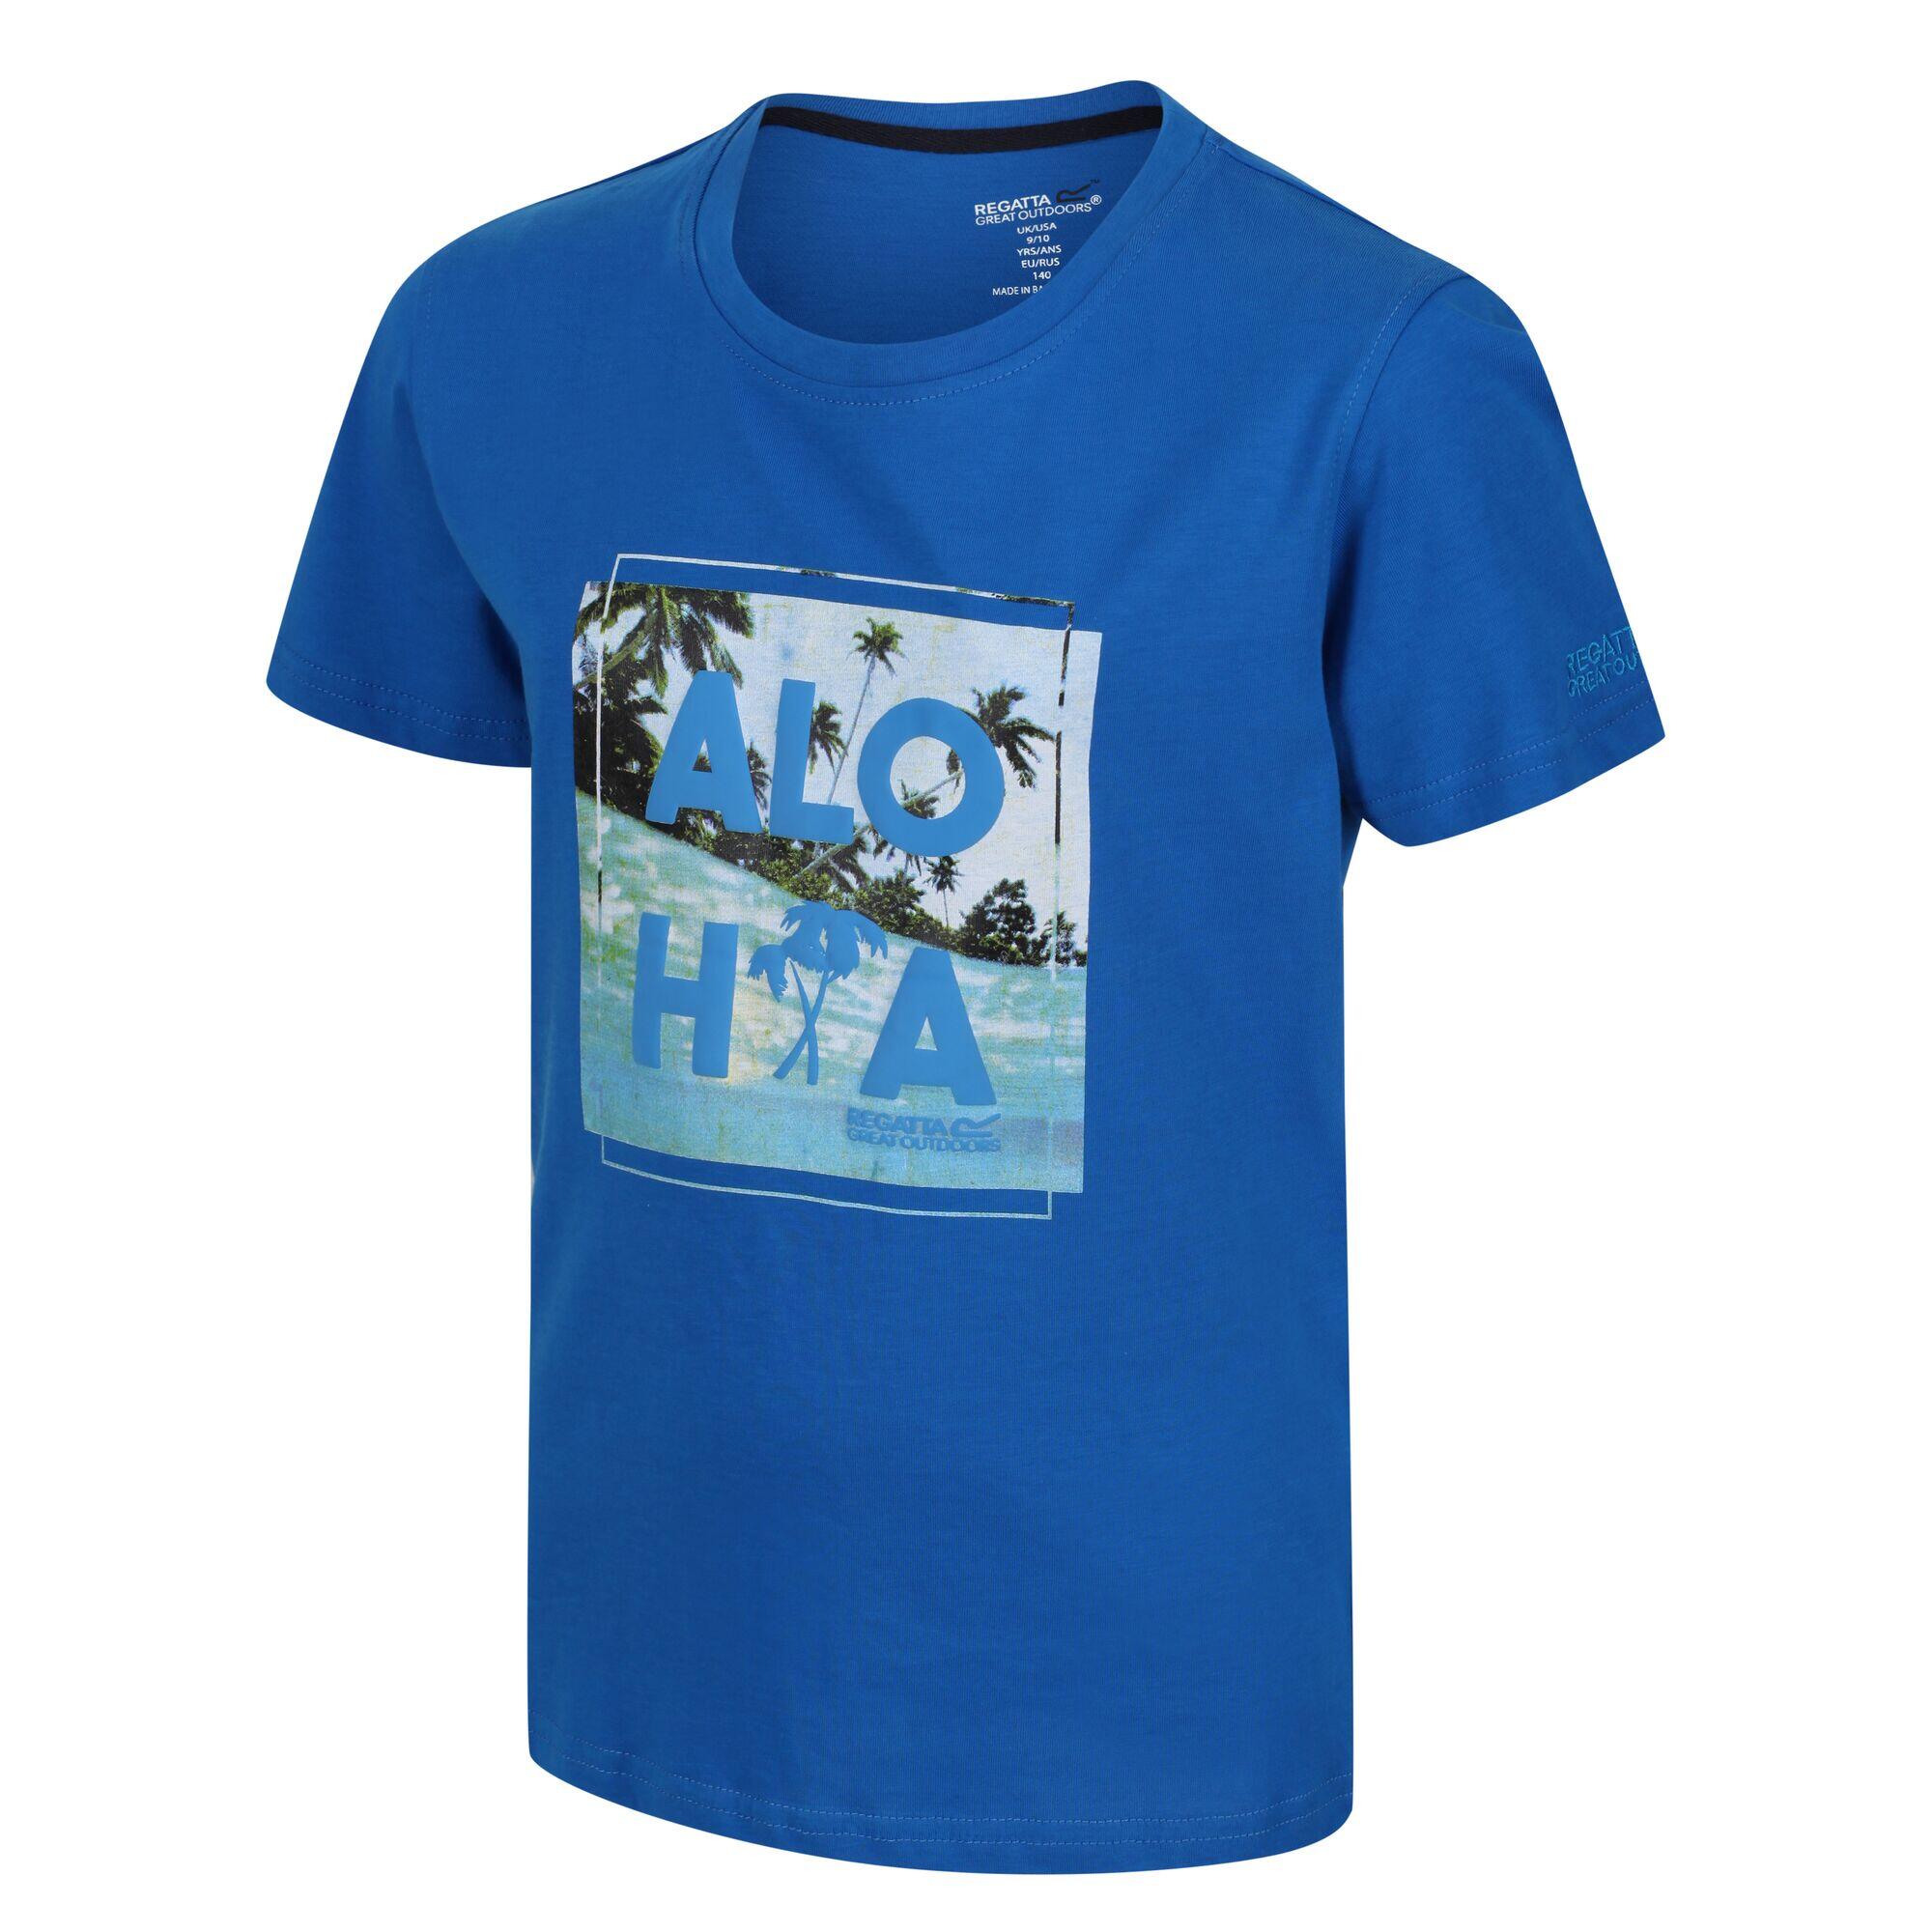 Bosley V Kids Walking Short Sleeve T-Shirt - Imperial Blue 3/5